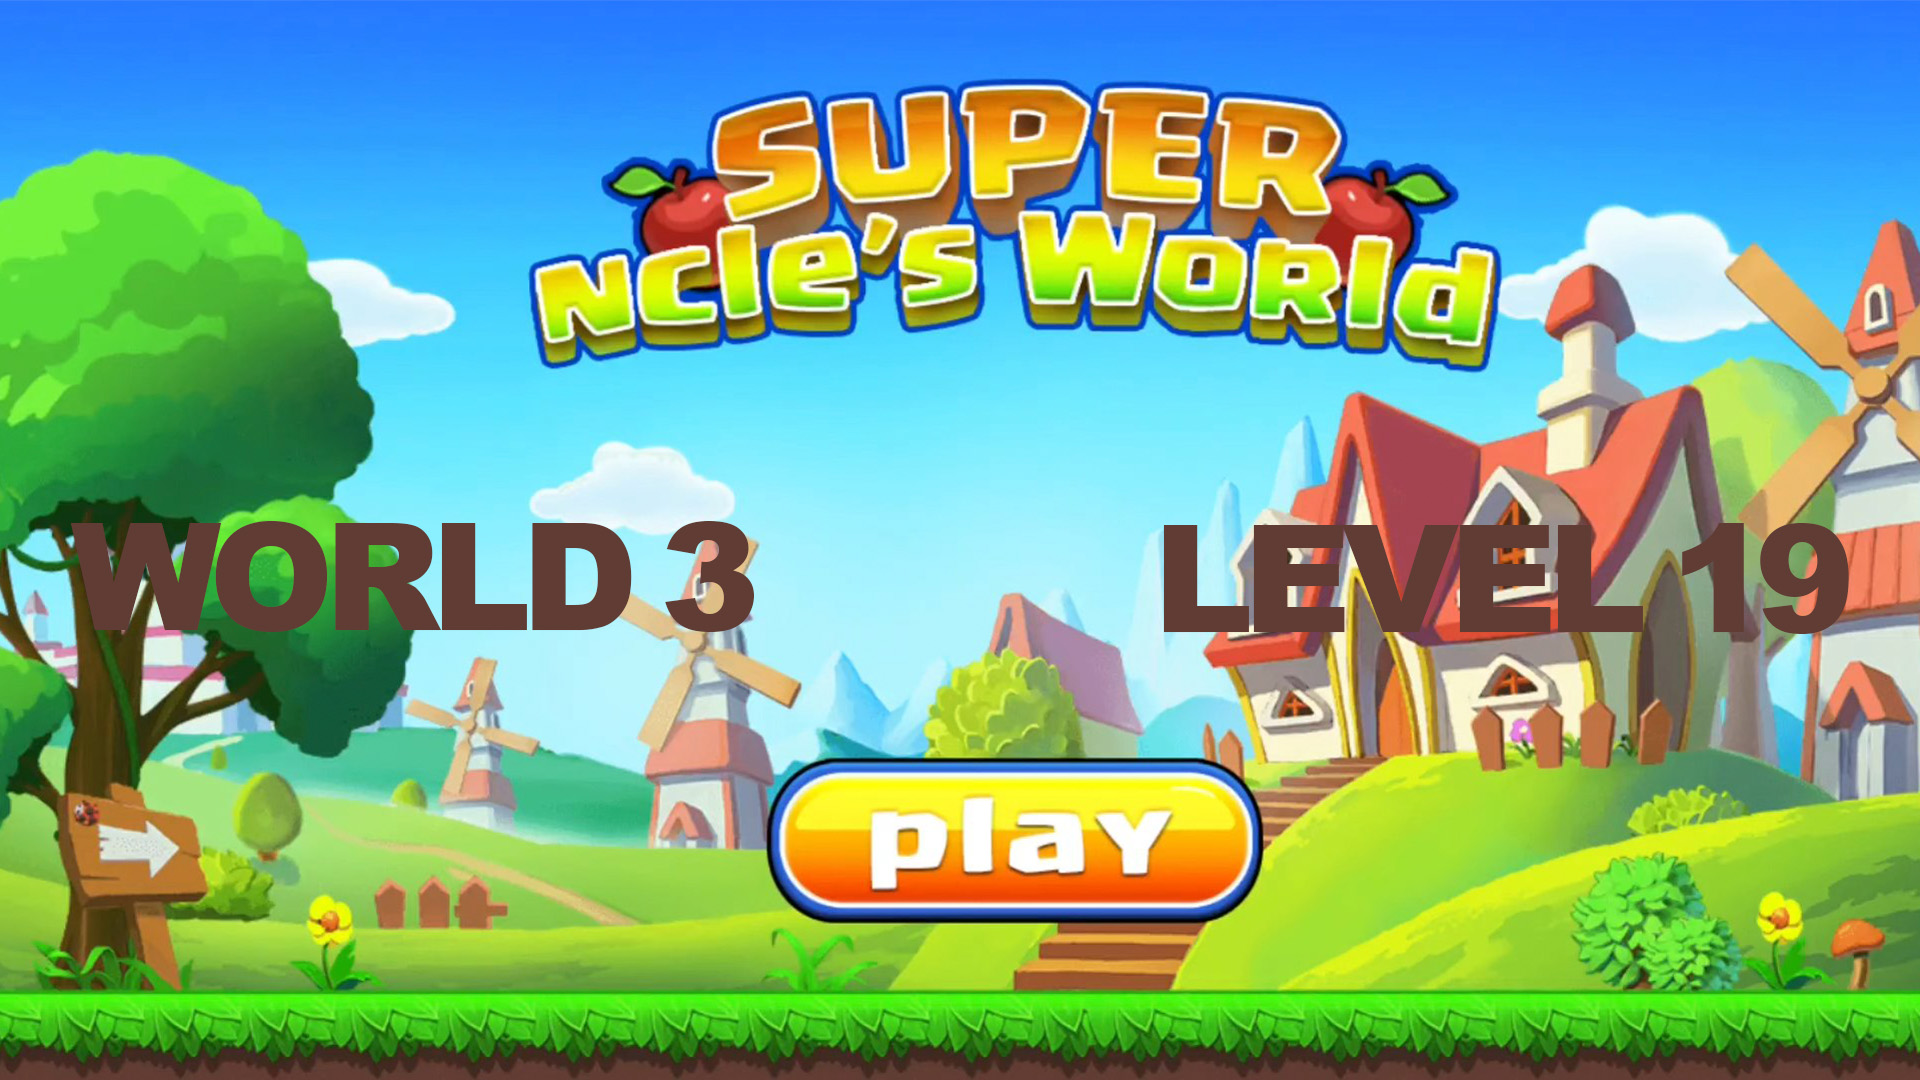 Super ncle's  World 3. Level 19.